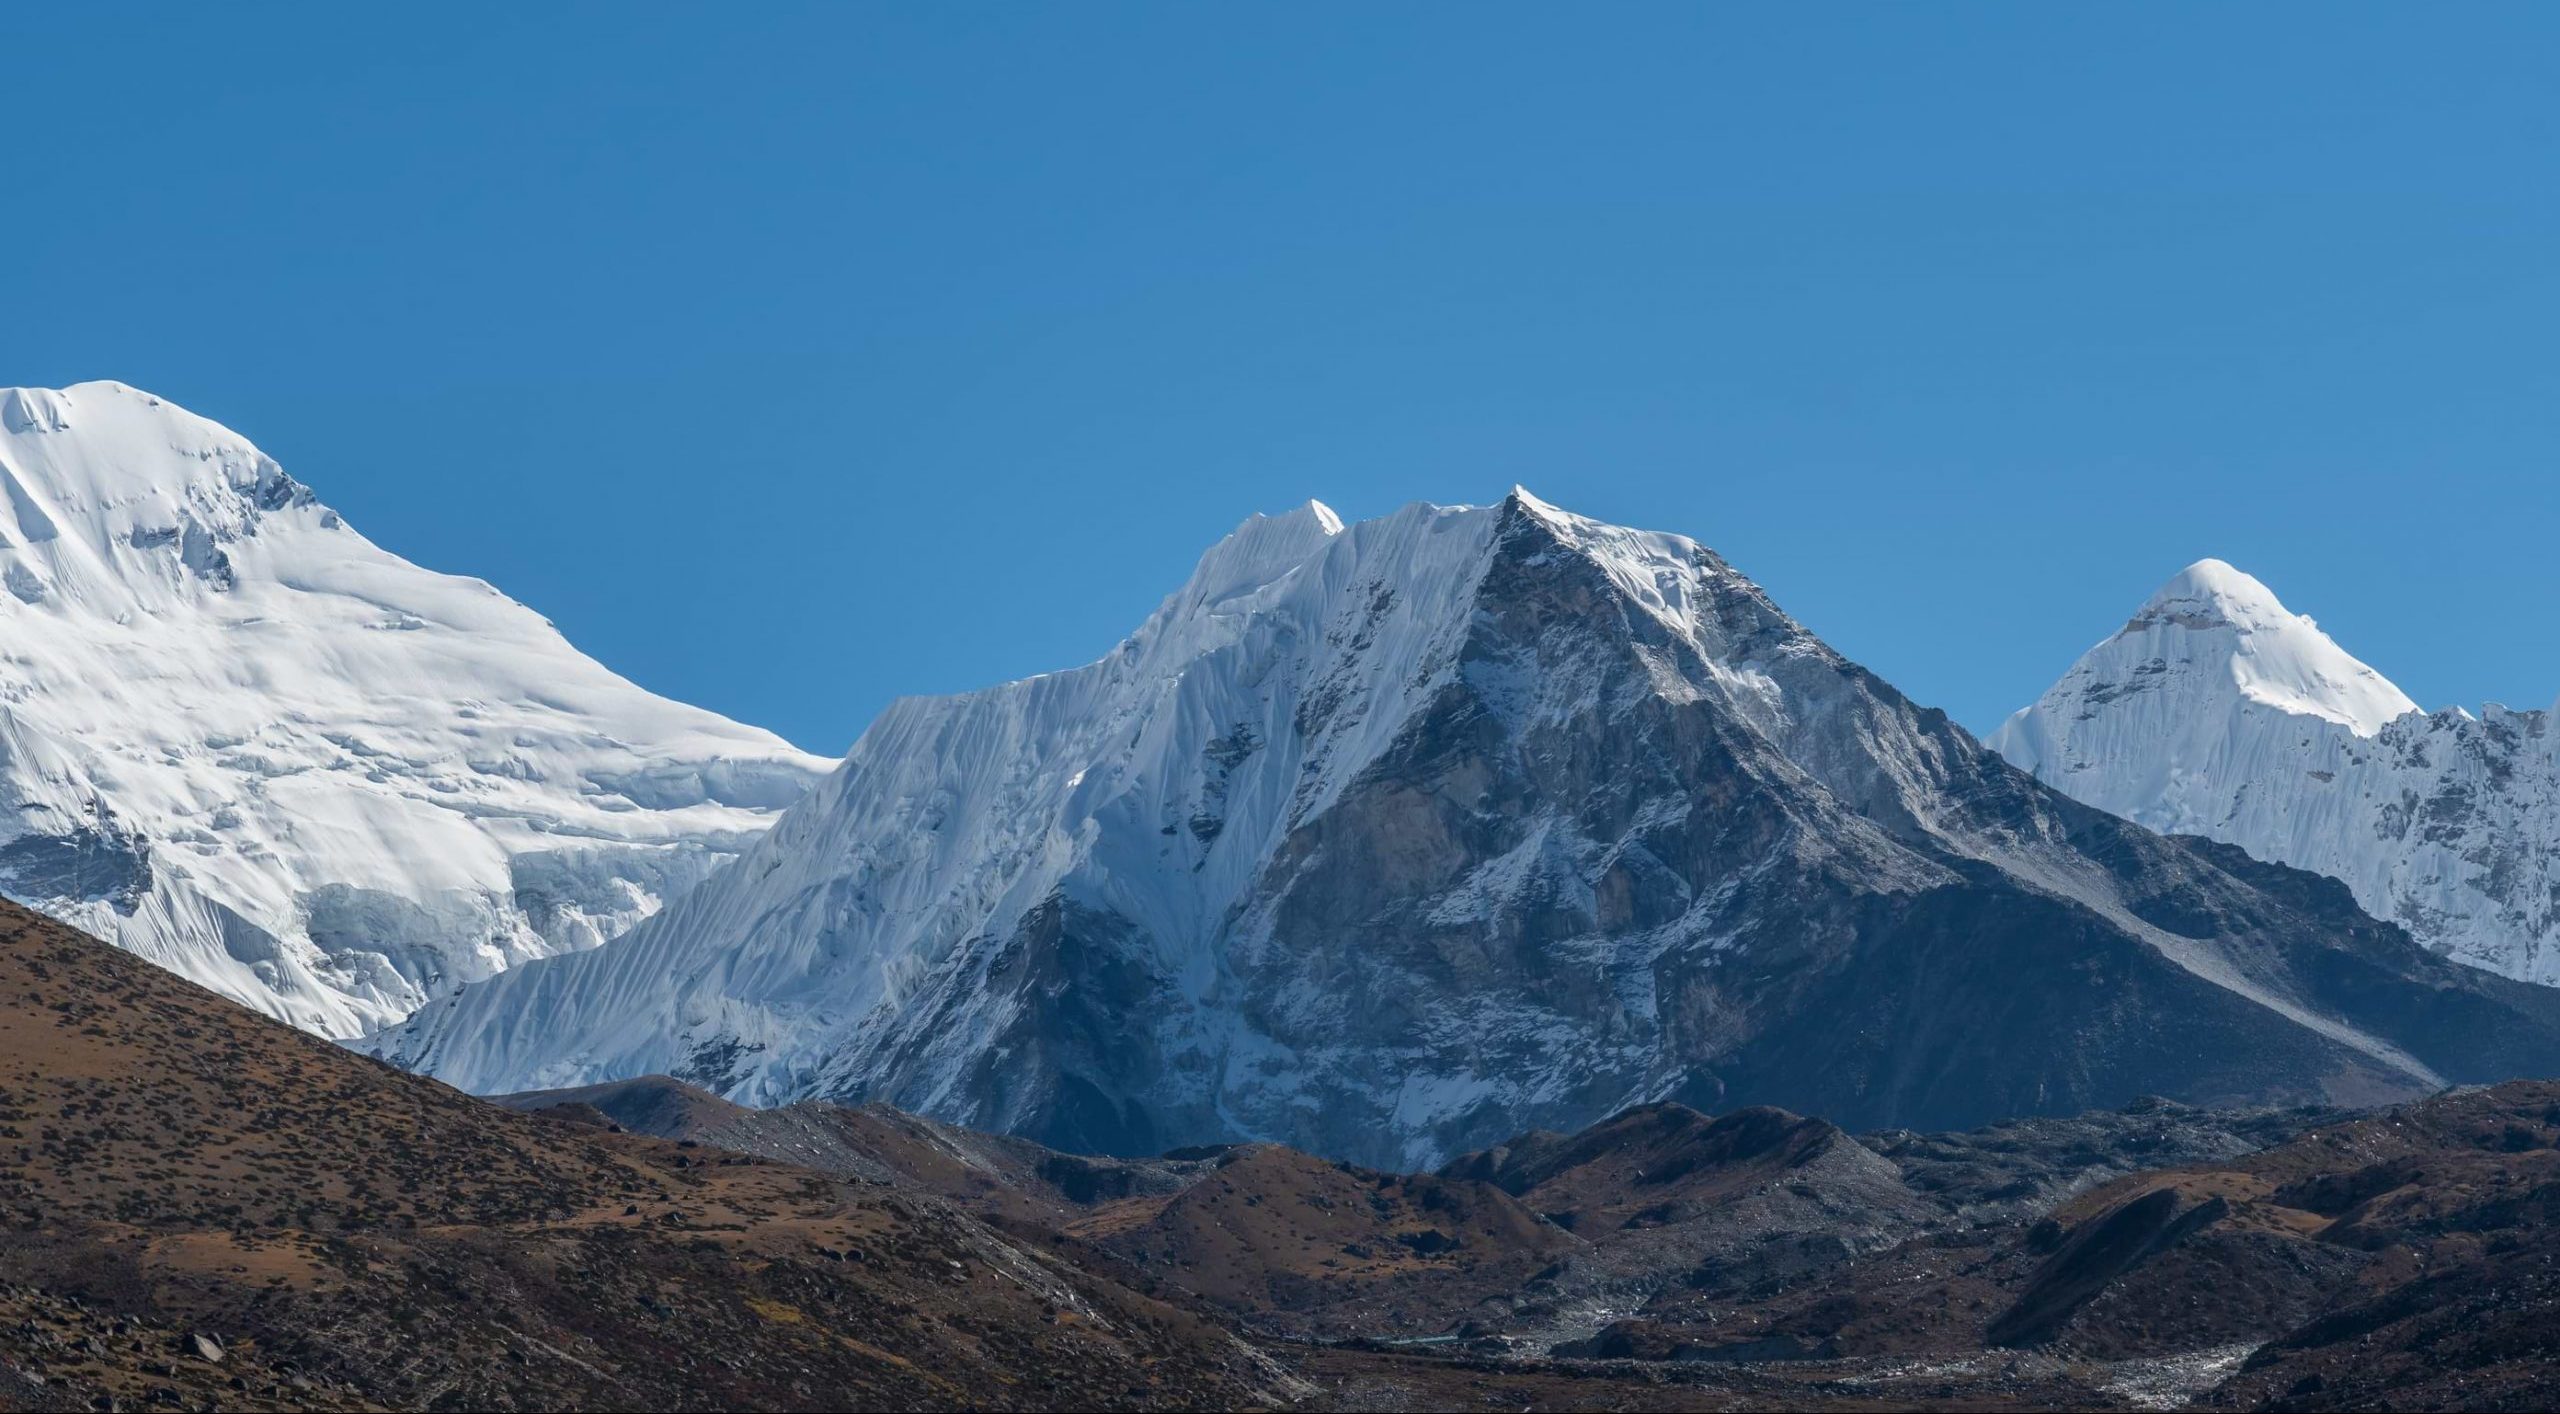 Island-peak-climbing-via-Chola-pass-Trek-scaled-e1590476461570 